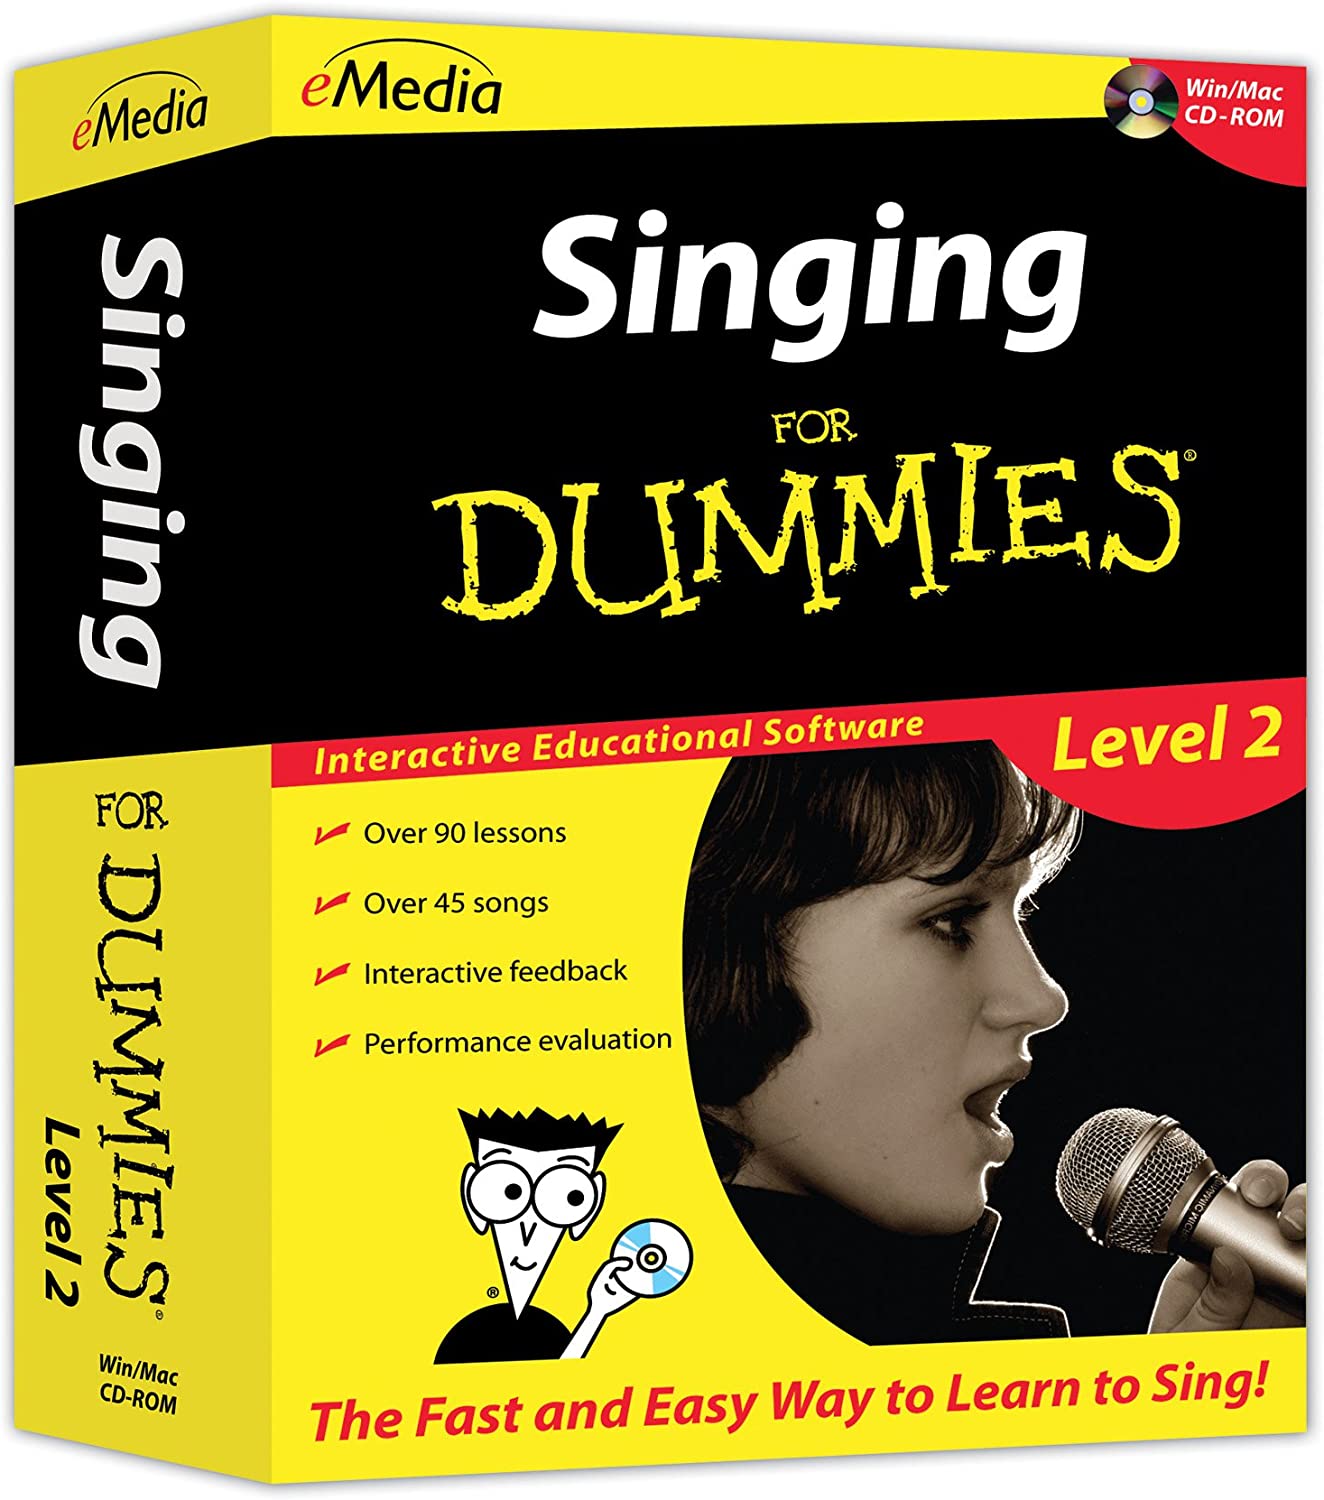 eMedia Singing For Dummies 2